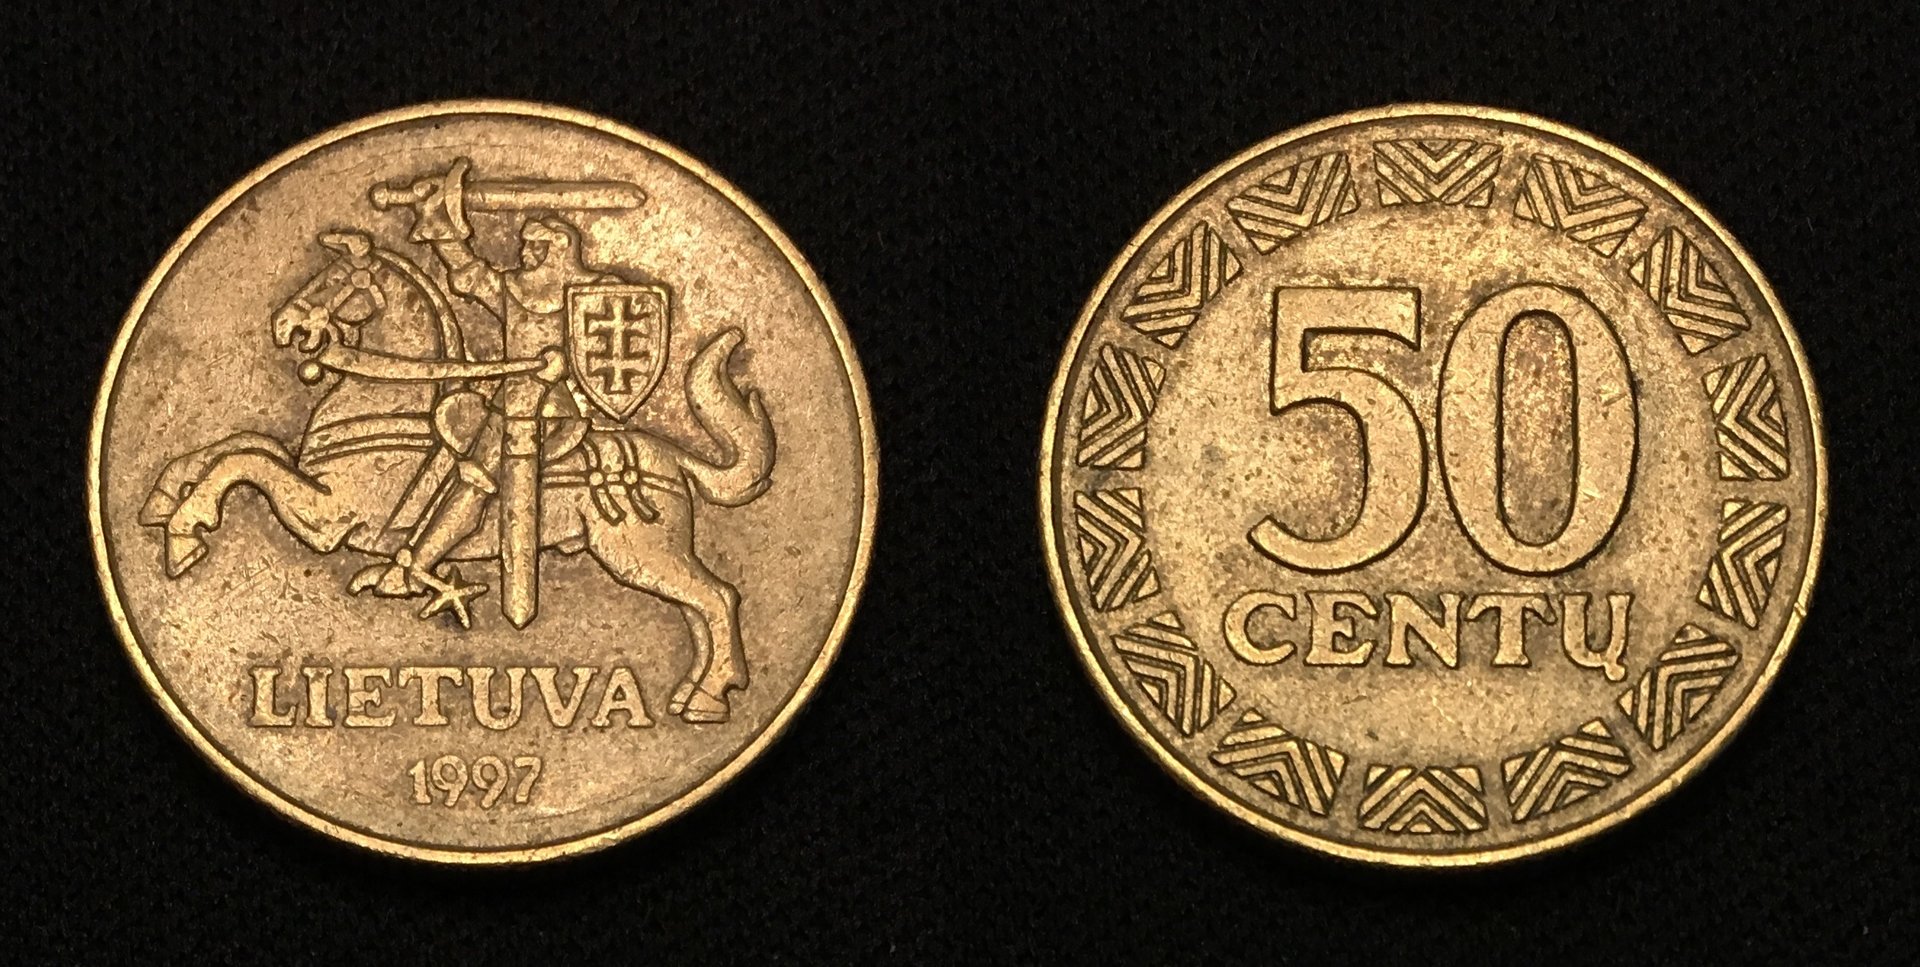 1997 CE 50 Centų S1 Combined.jpg